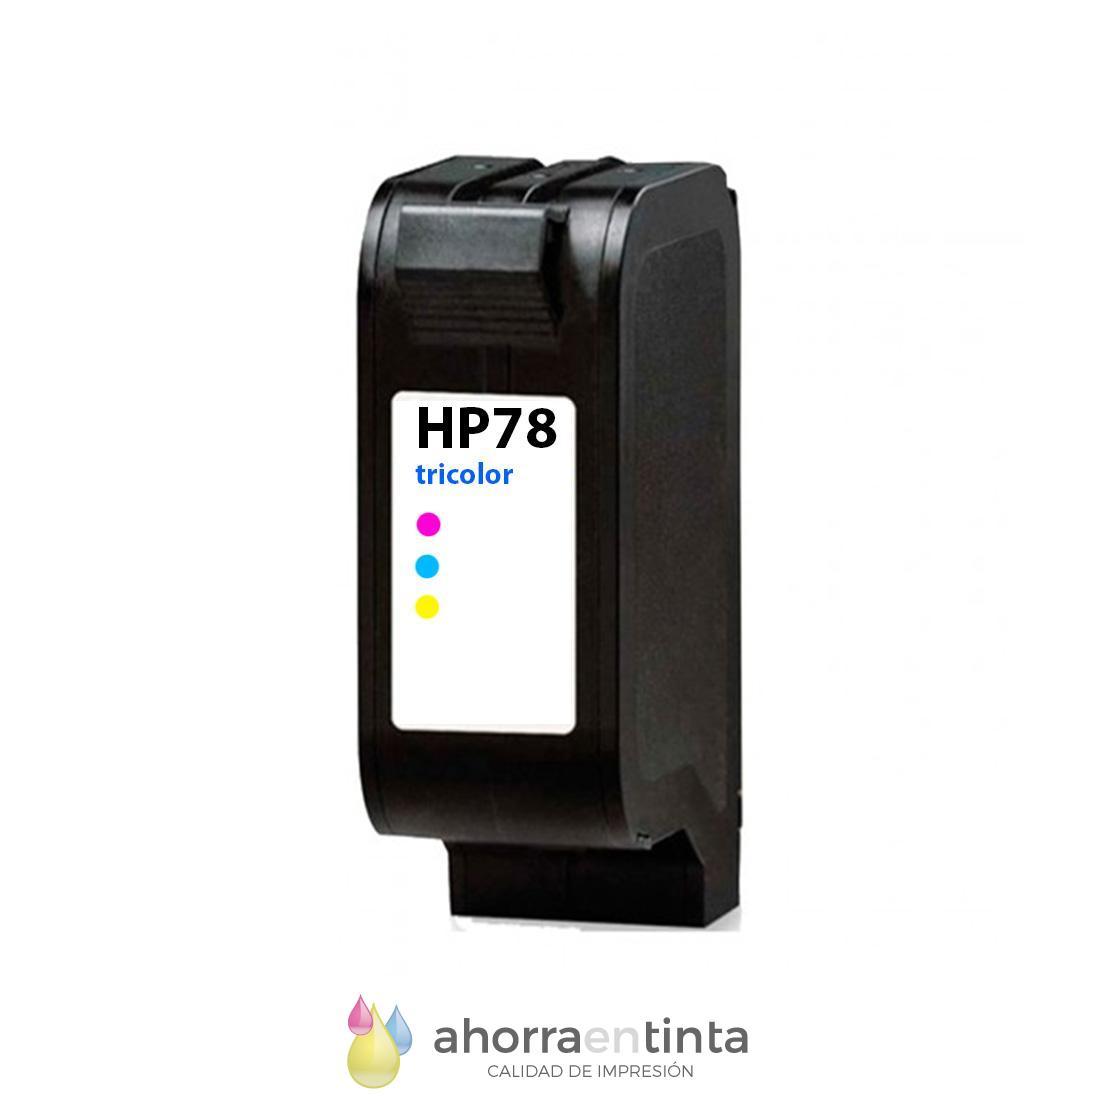 alma Hora semestre HP 78 Cartuchos compatibles tinta Tricolor HP6578E